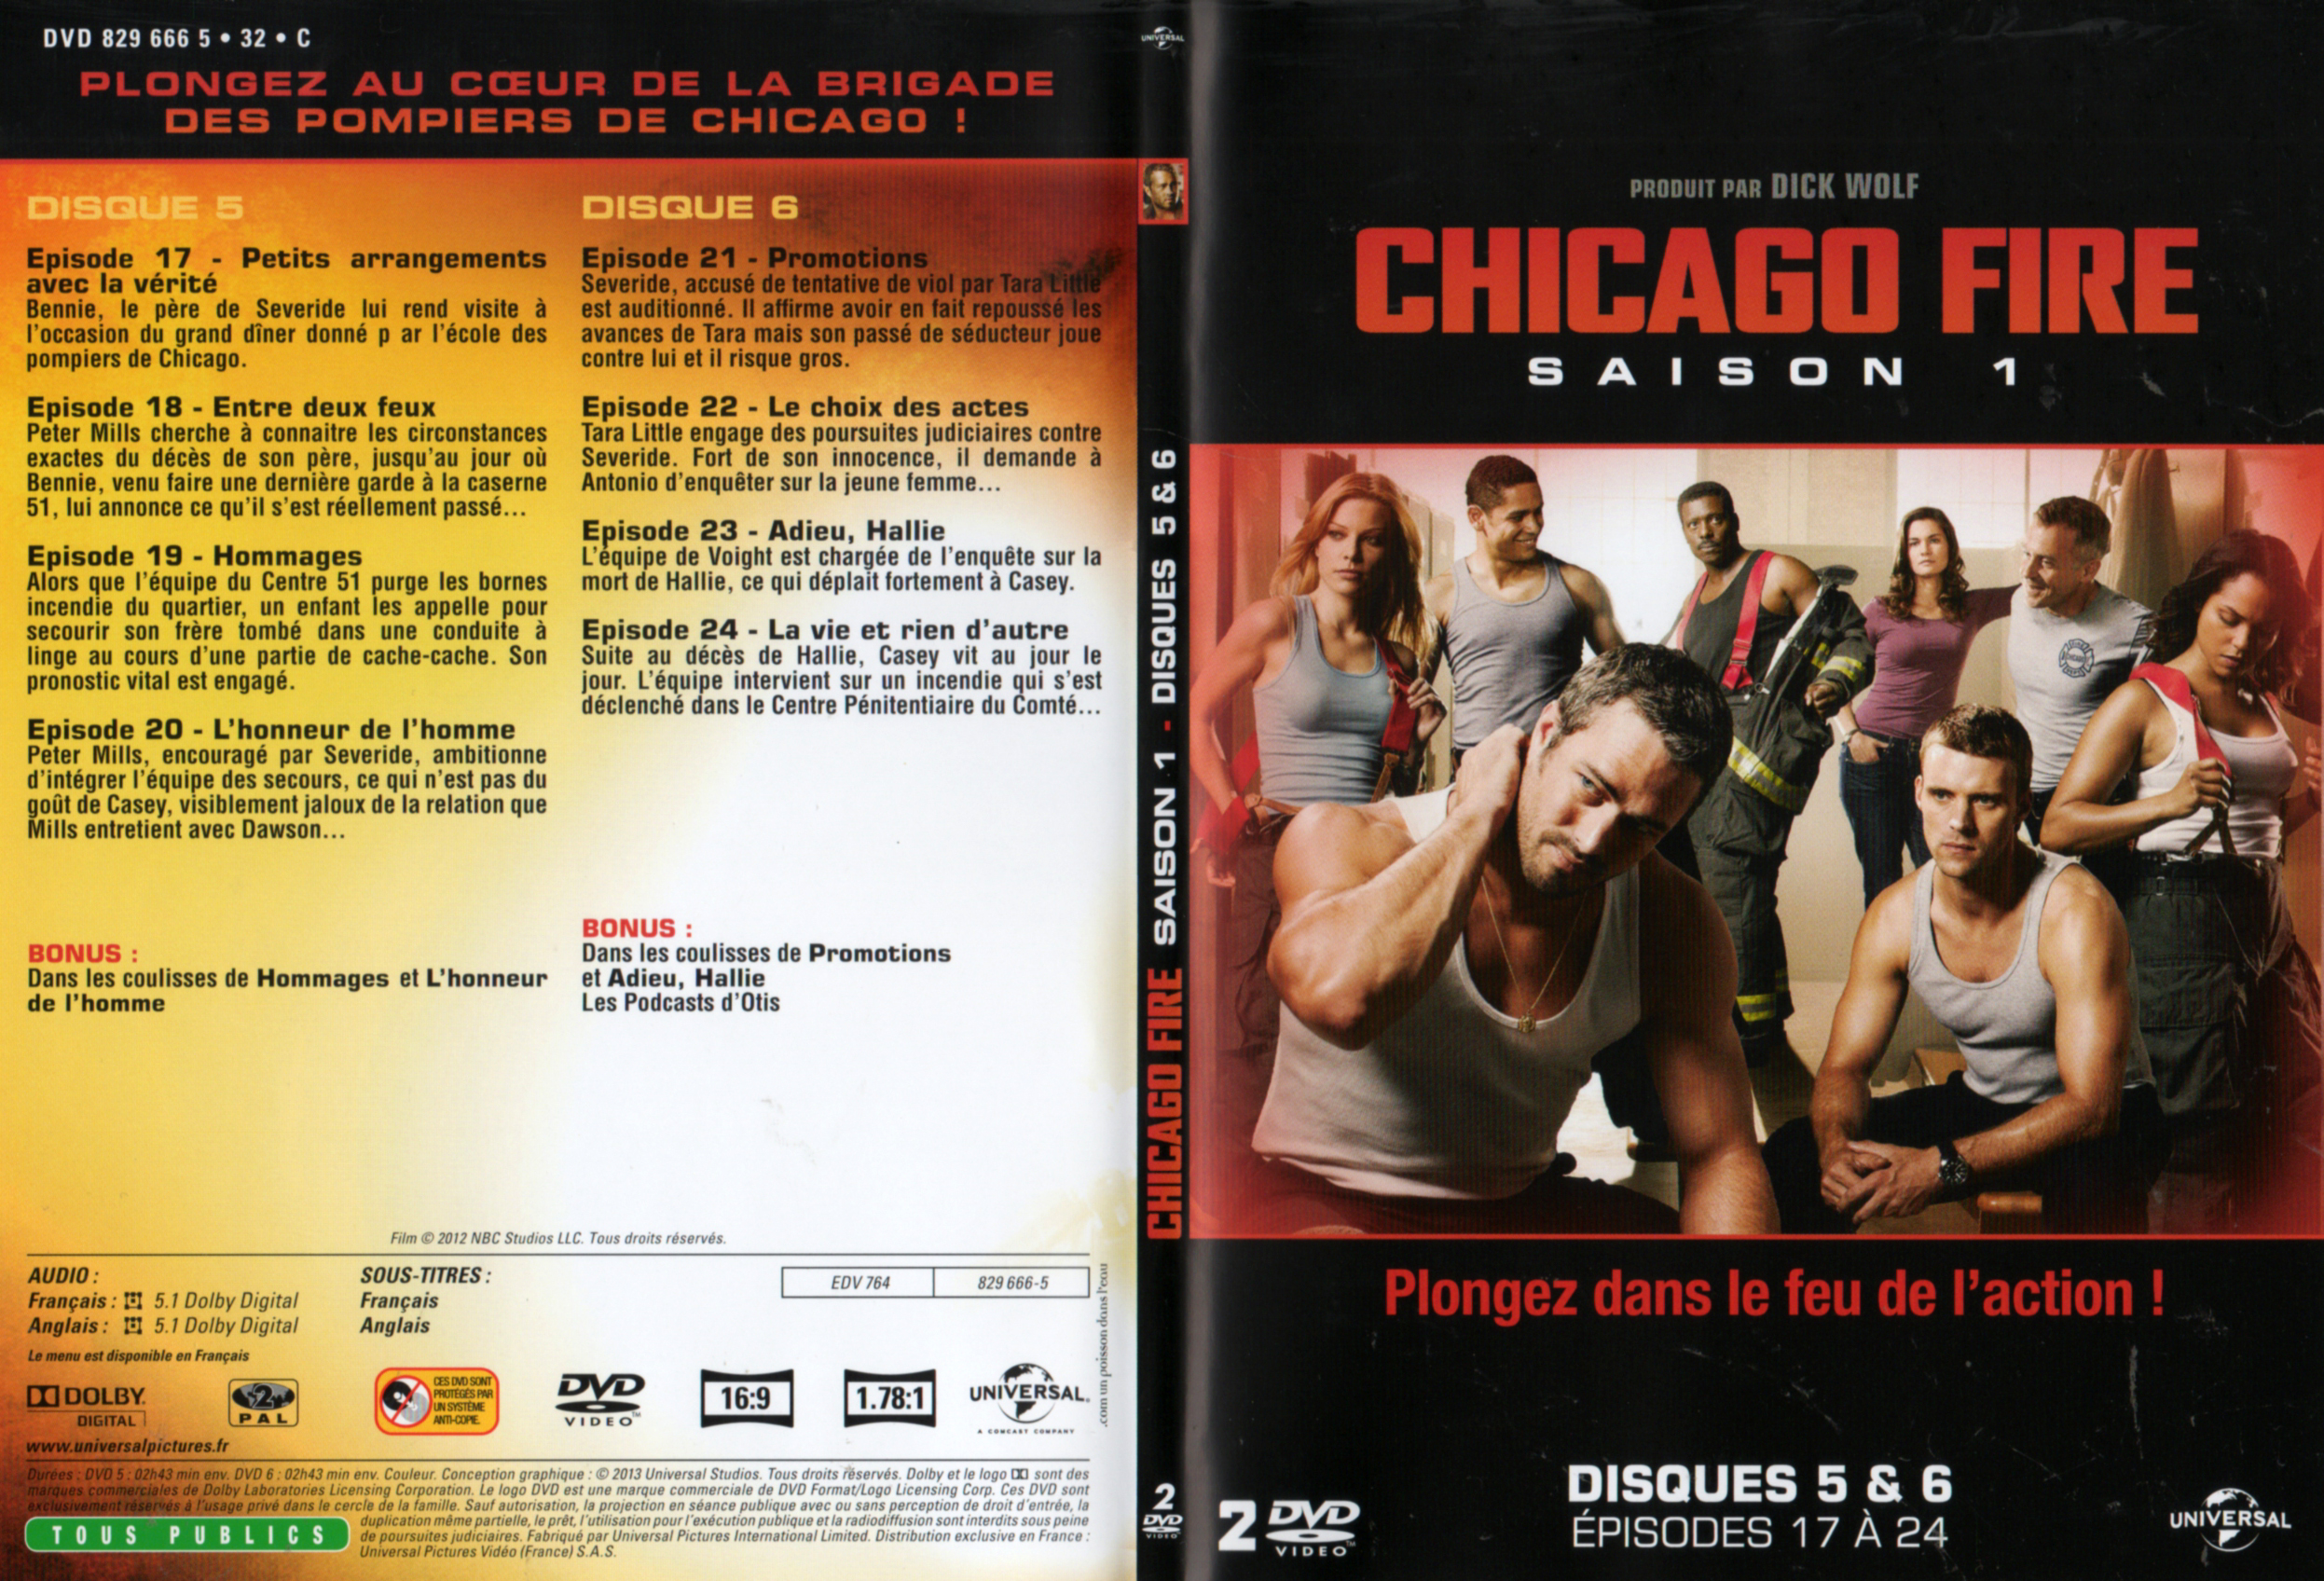 Jaquette DVD Chicago Fire Saison 1 DVD 3